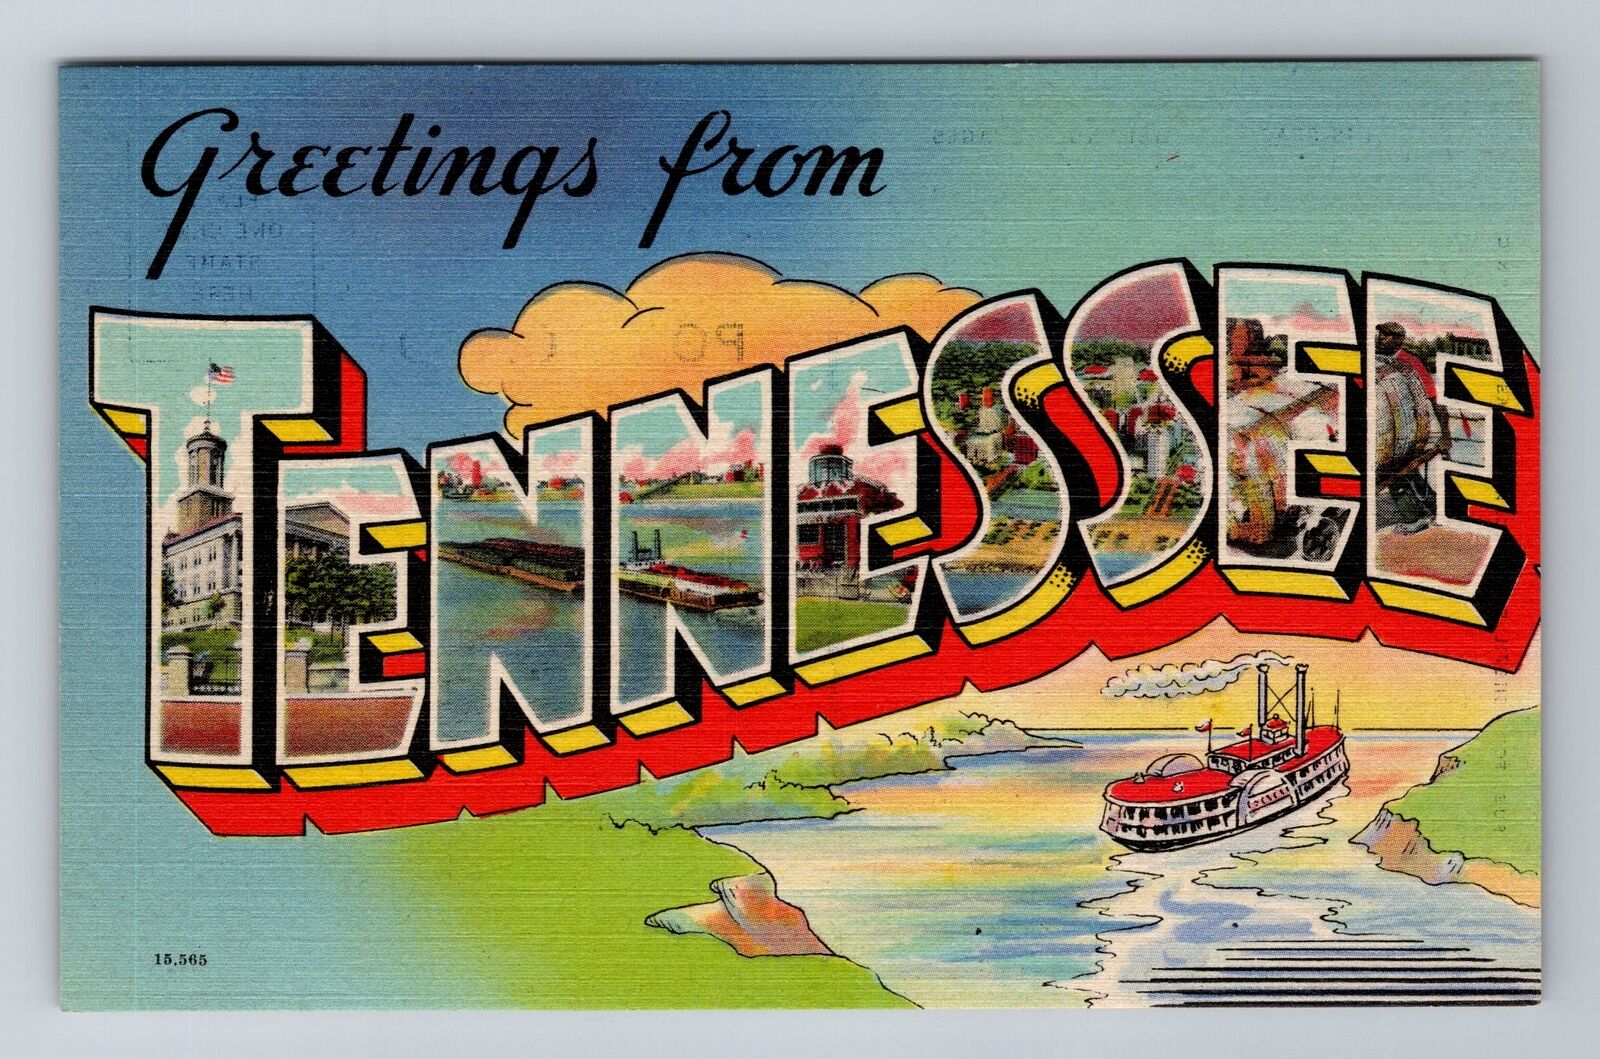 TN-Tennessee, General Large Letter Greetings, Antique Vintage Souvenir Postcard